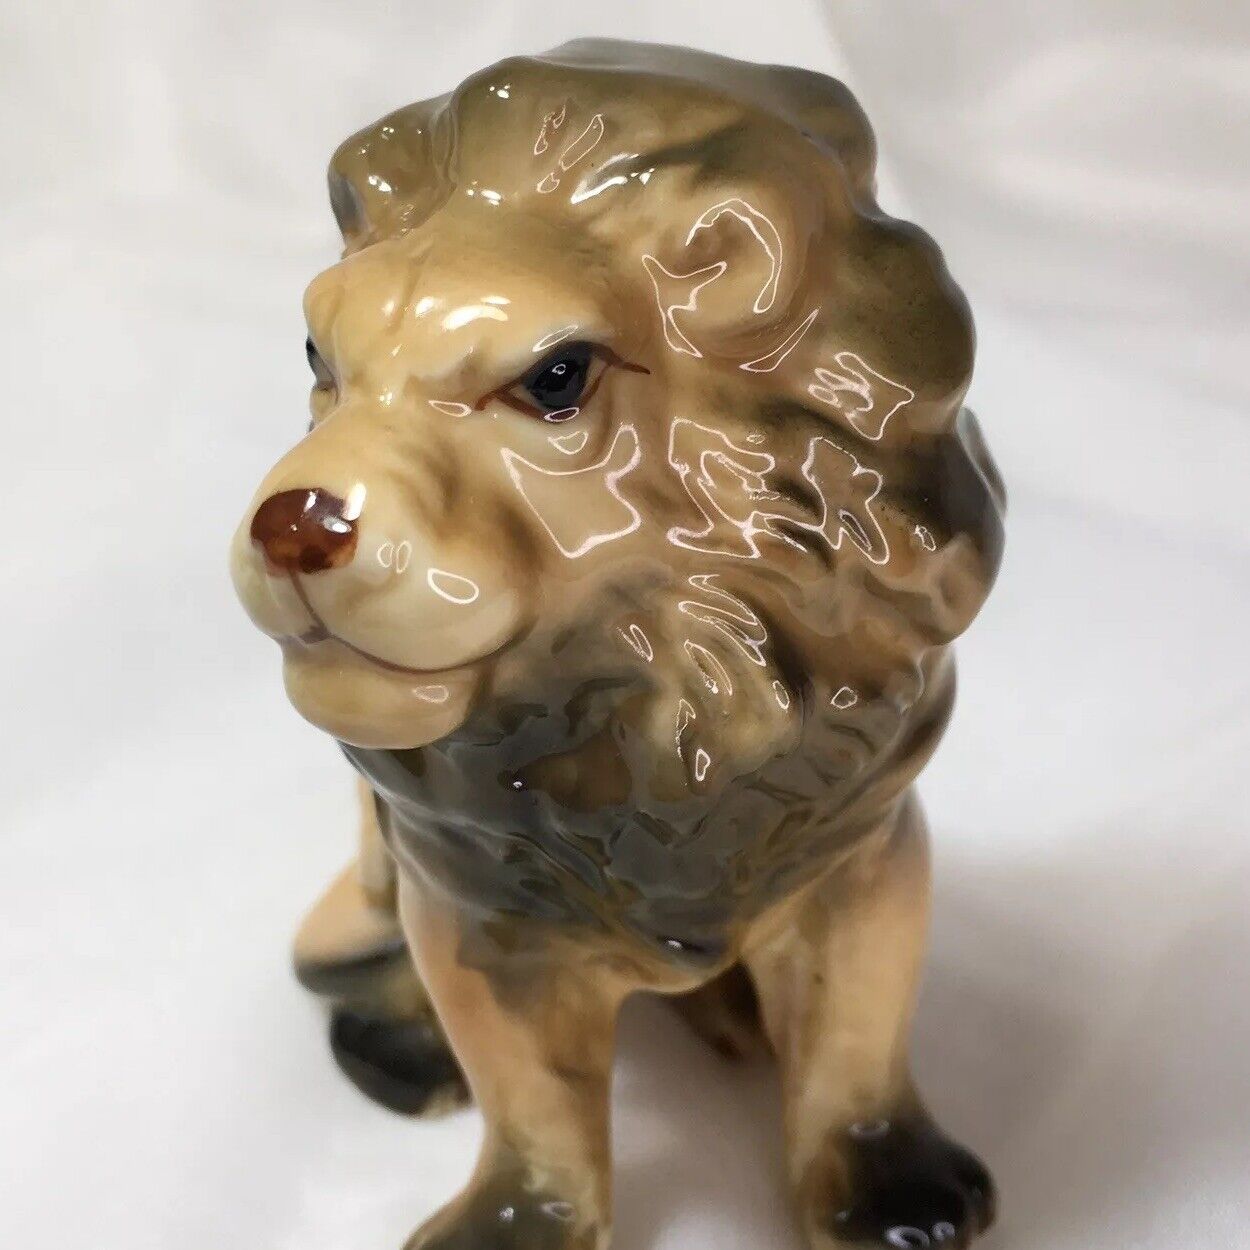 3.25” Lion Figurine, Vintage Glazed Porcelain, Grumpy Collectible❤️